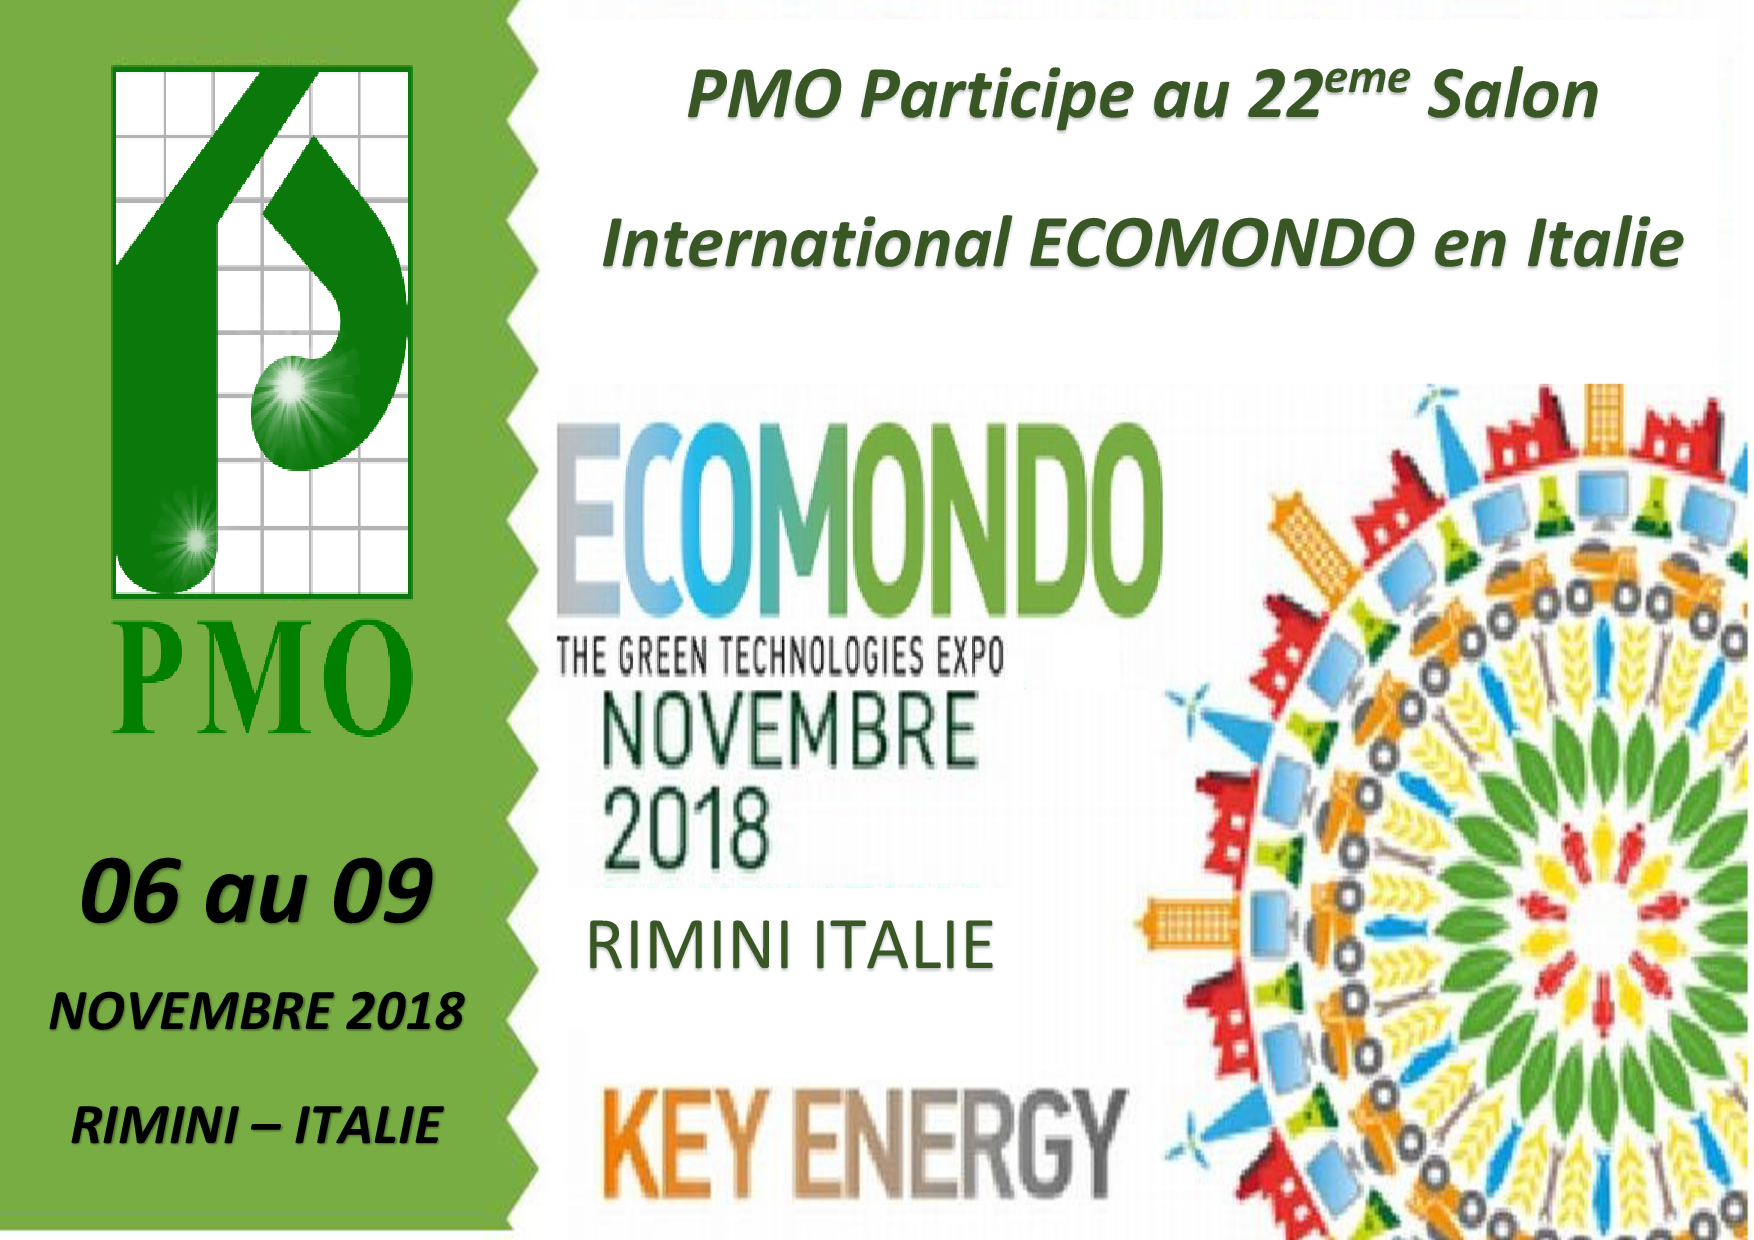 PMO Participe au 22eme Salon International ECOMONDO 2018 en Italie